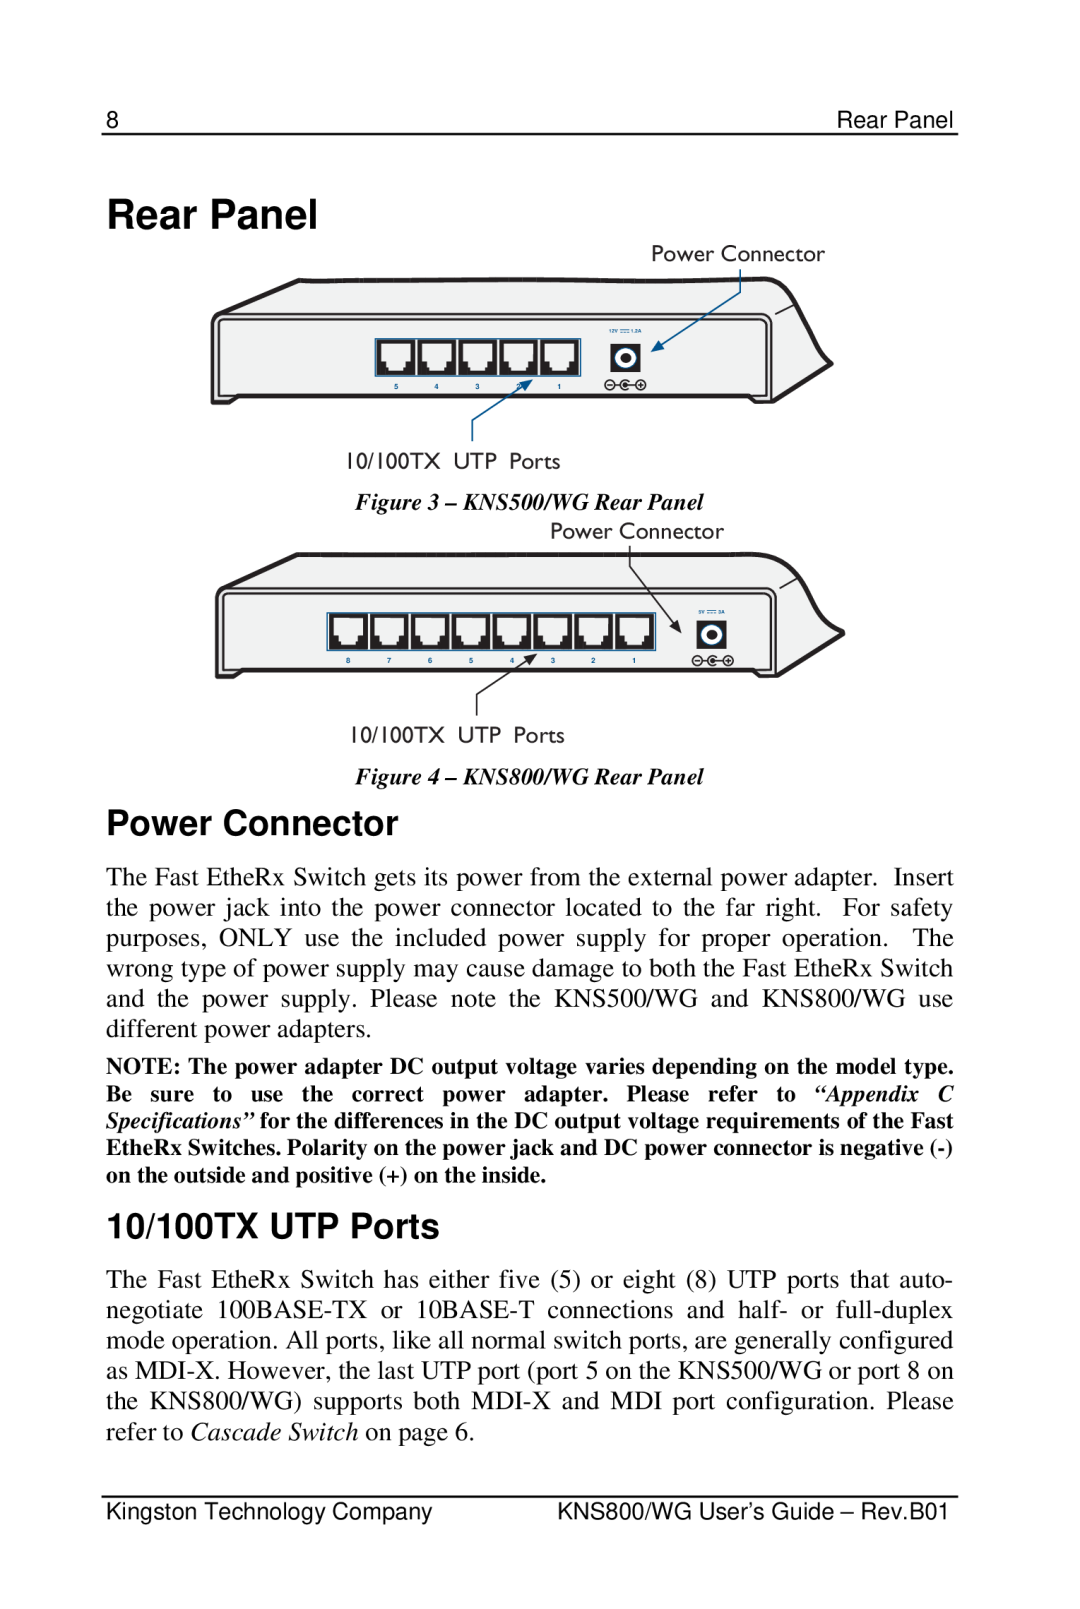 Kingston Technology KNS800/WG, KNS500/WG manual Rear Panel, Power Connector, 10/100TX UTP Ports 